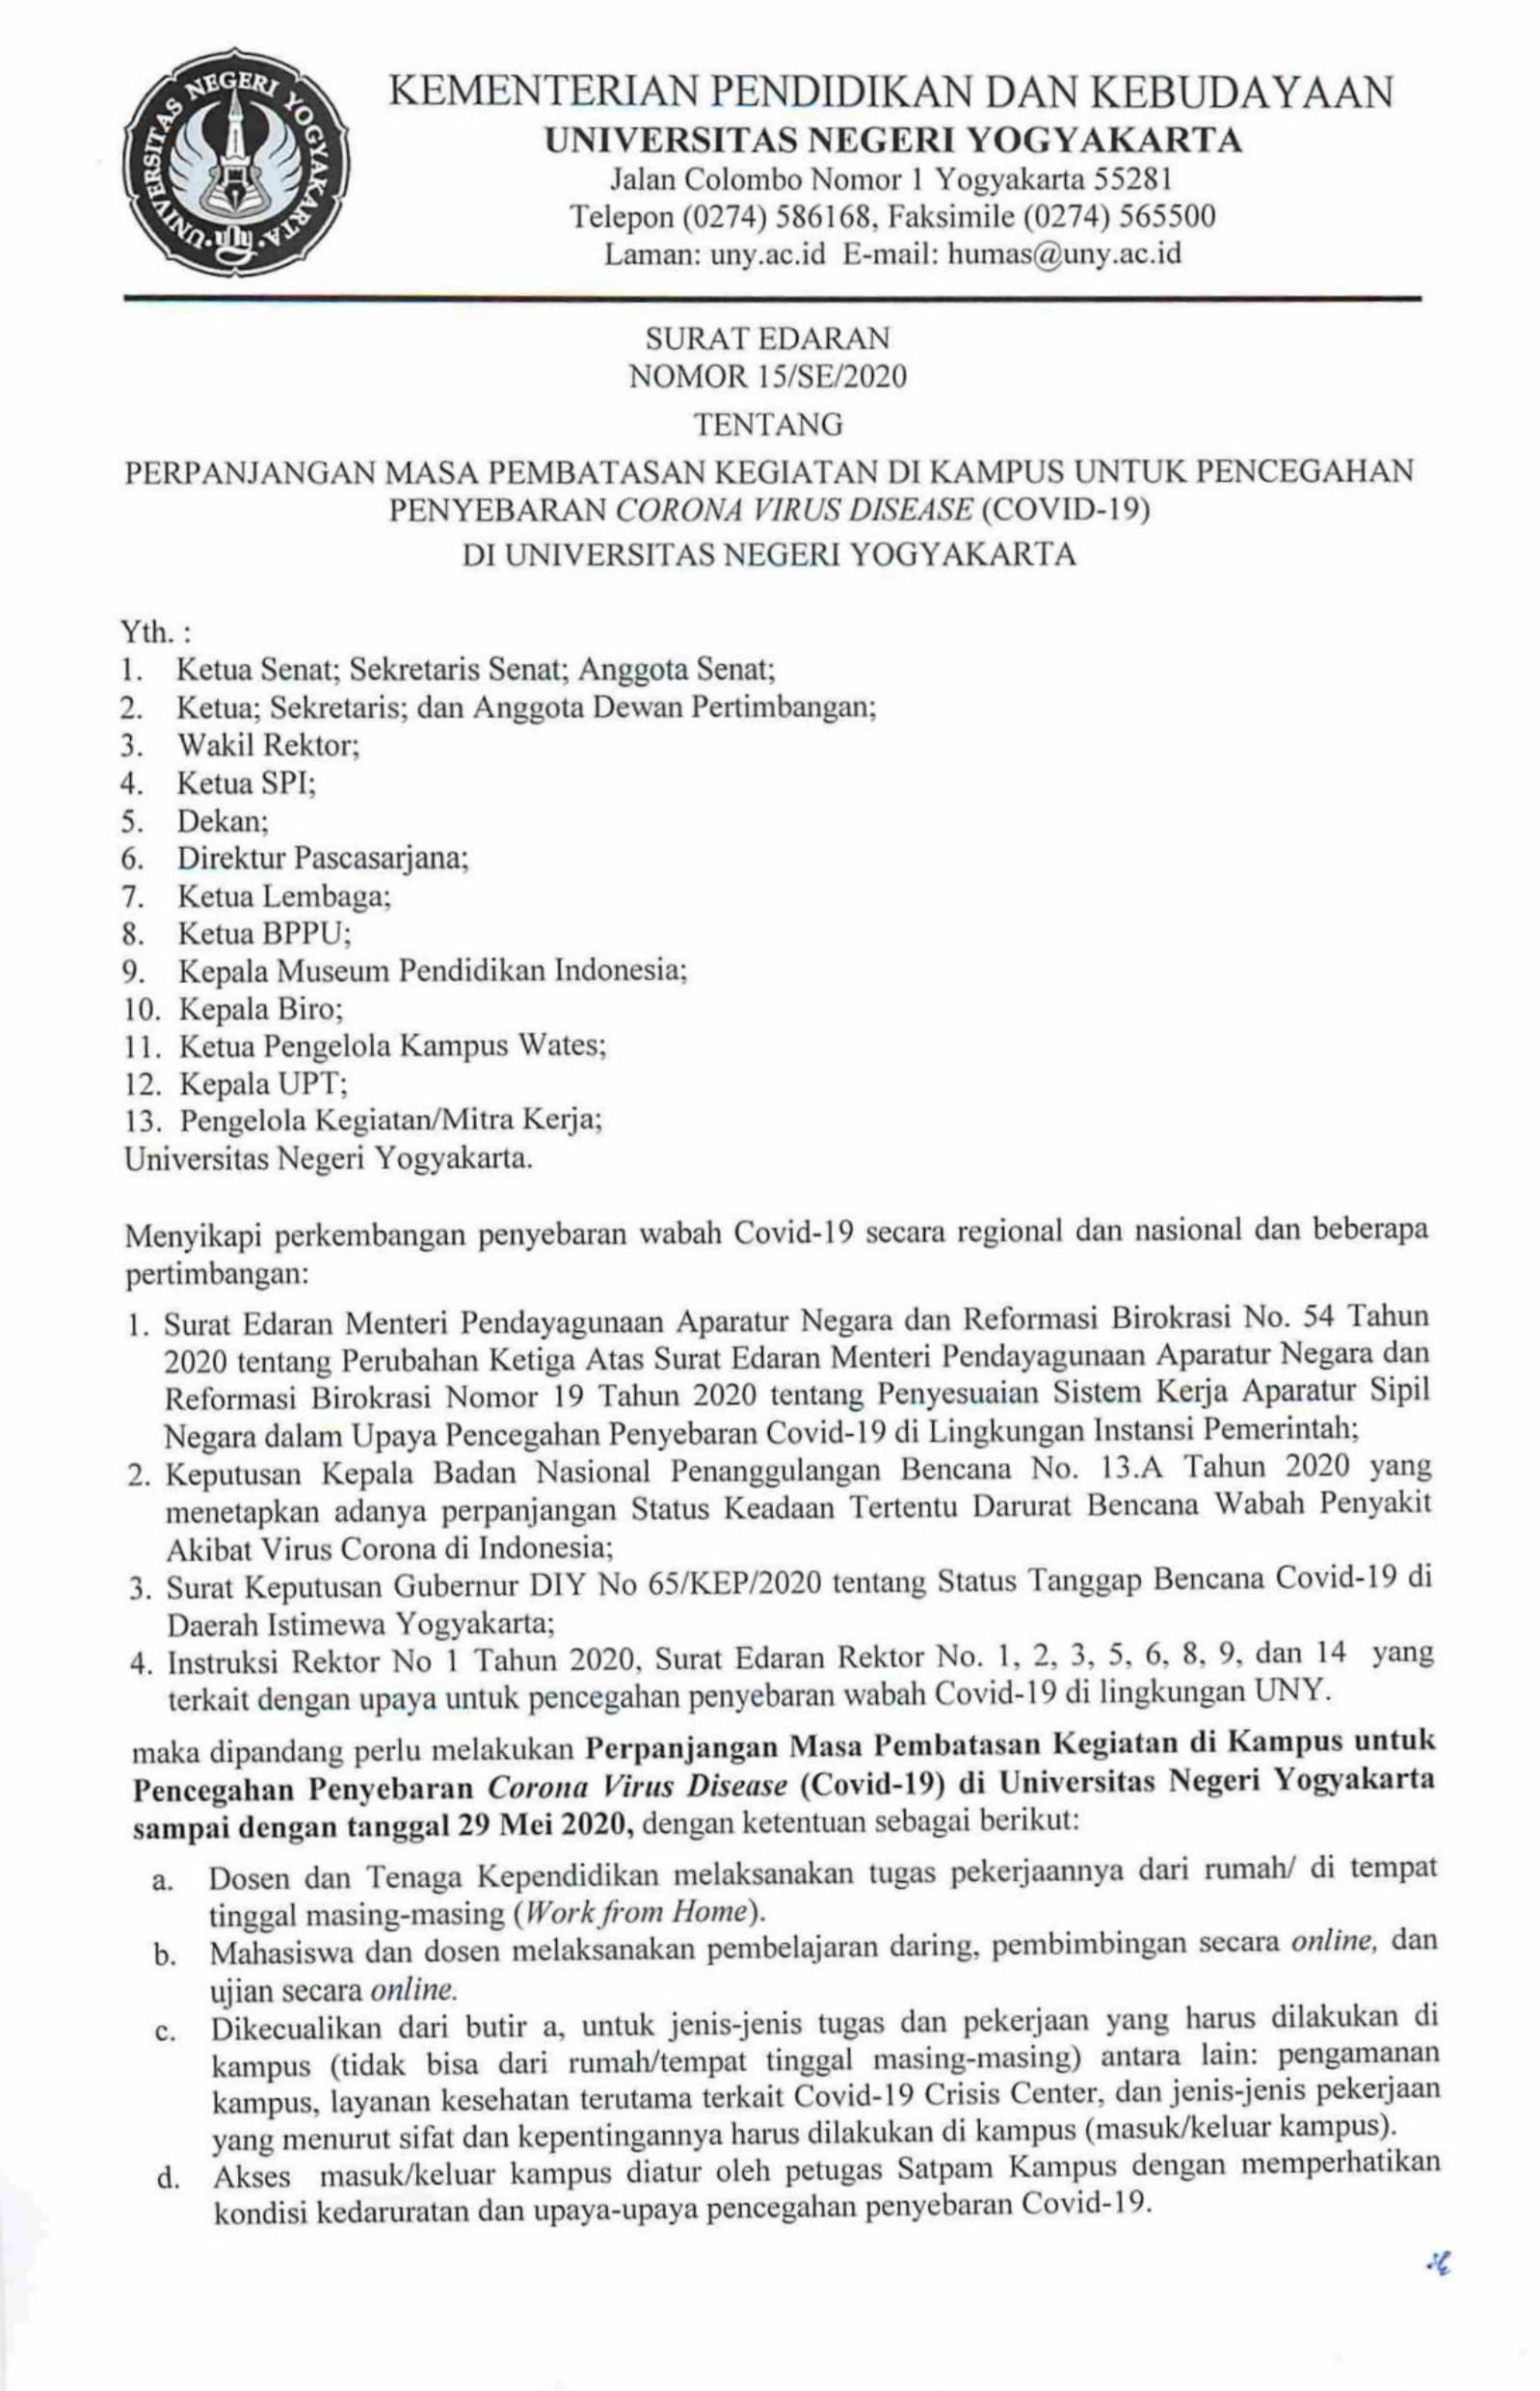 SURAT EDARAN NO 15/SE/2020 tentang Perpanjangan Masa Pembatasan Kegiatan di Kampus untuk Pencegahan Penyebaran Corona Virus Disease 2019 (Covid-19) di Universitas Negeri Yogyakarta